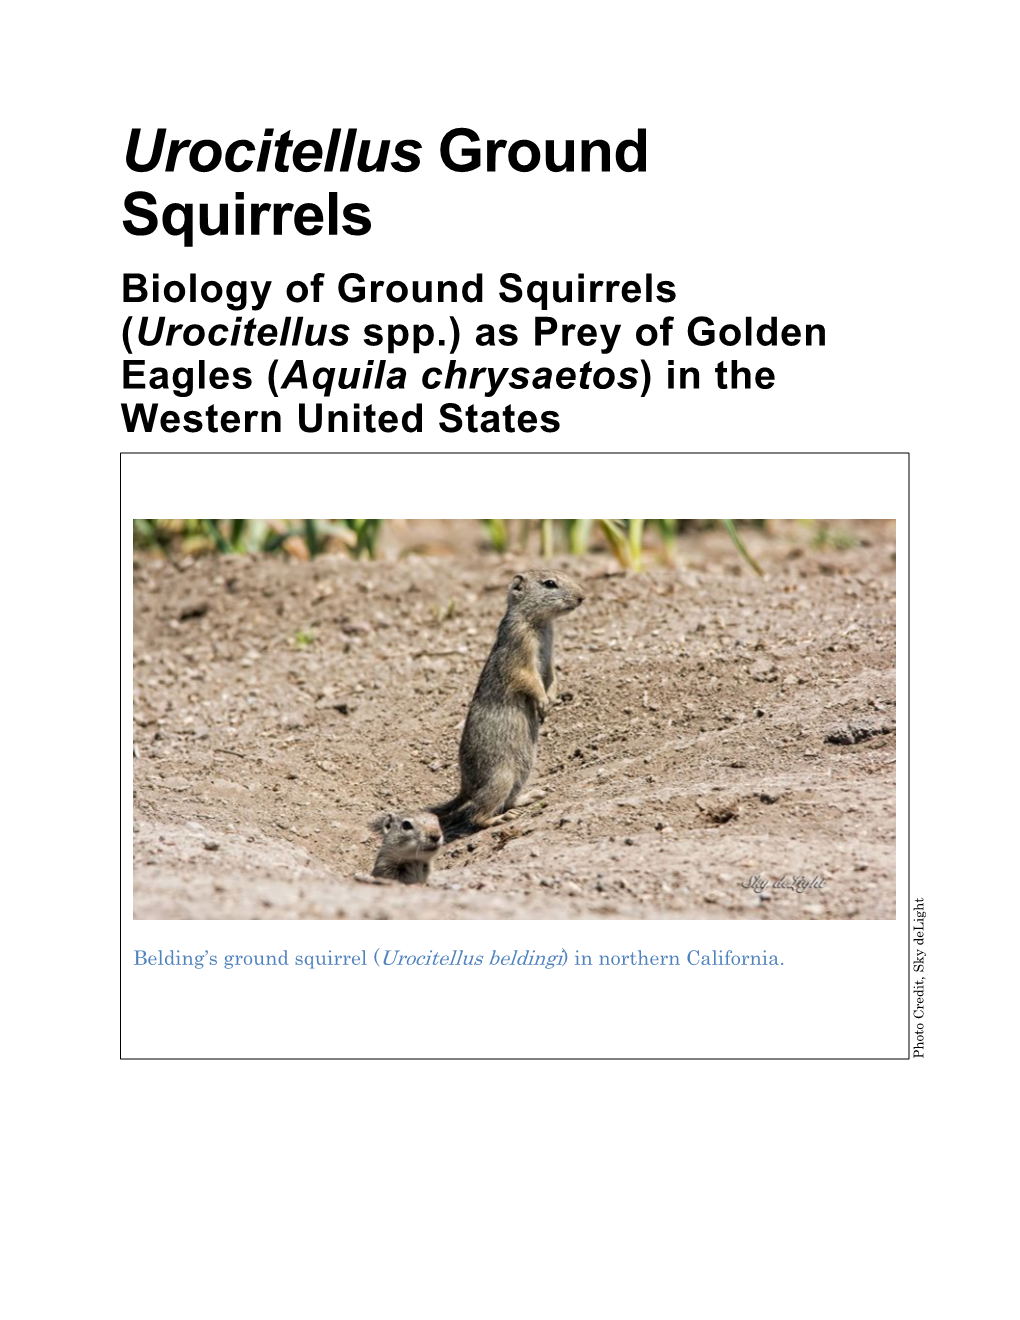 Urocitellus Ground Squirrels Biology of Ground Squirrels (Urocitellus Spp.) As Prey of Golden Eagles (Aquila Chrysaetos) in the Western United States